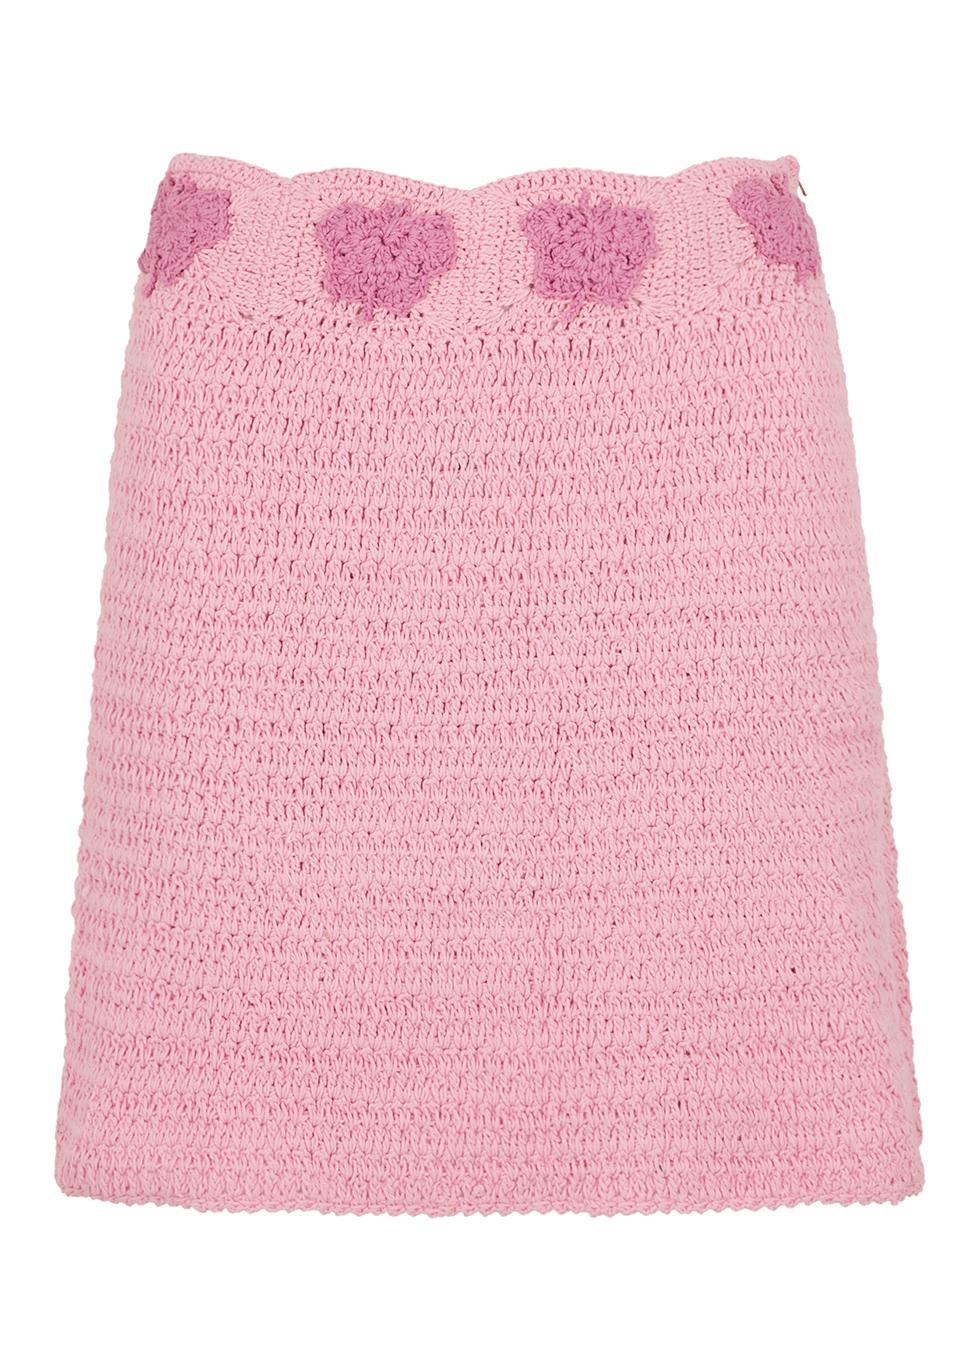 Butterfly pink crochet mini skirt by CRO-CHE